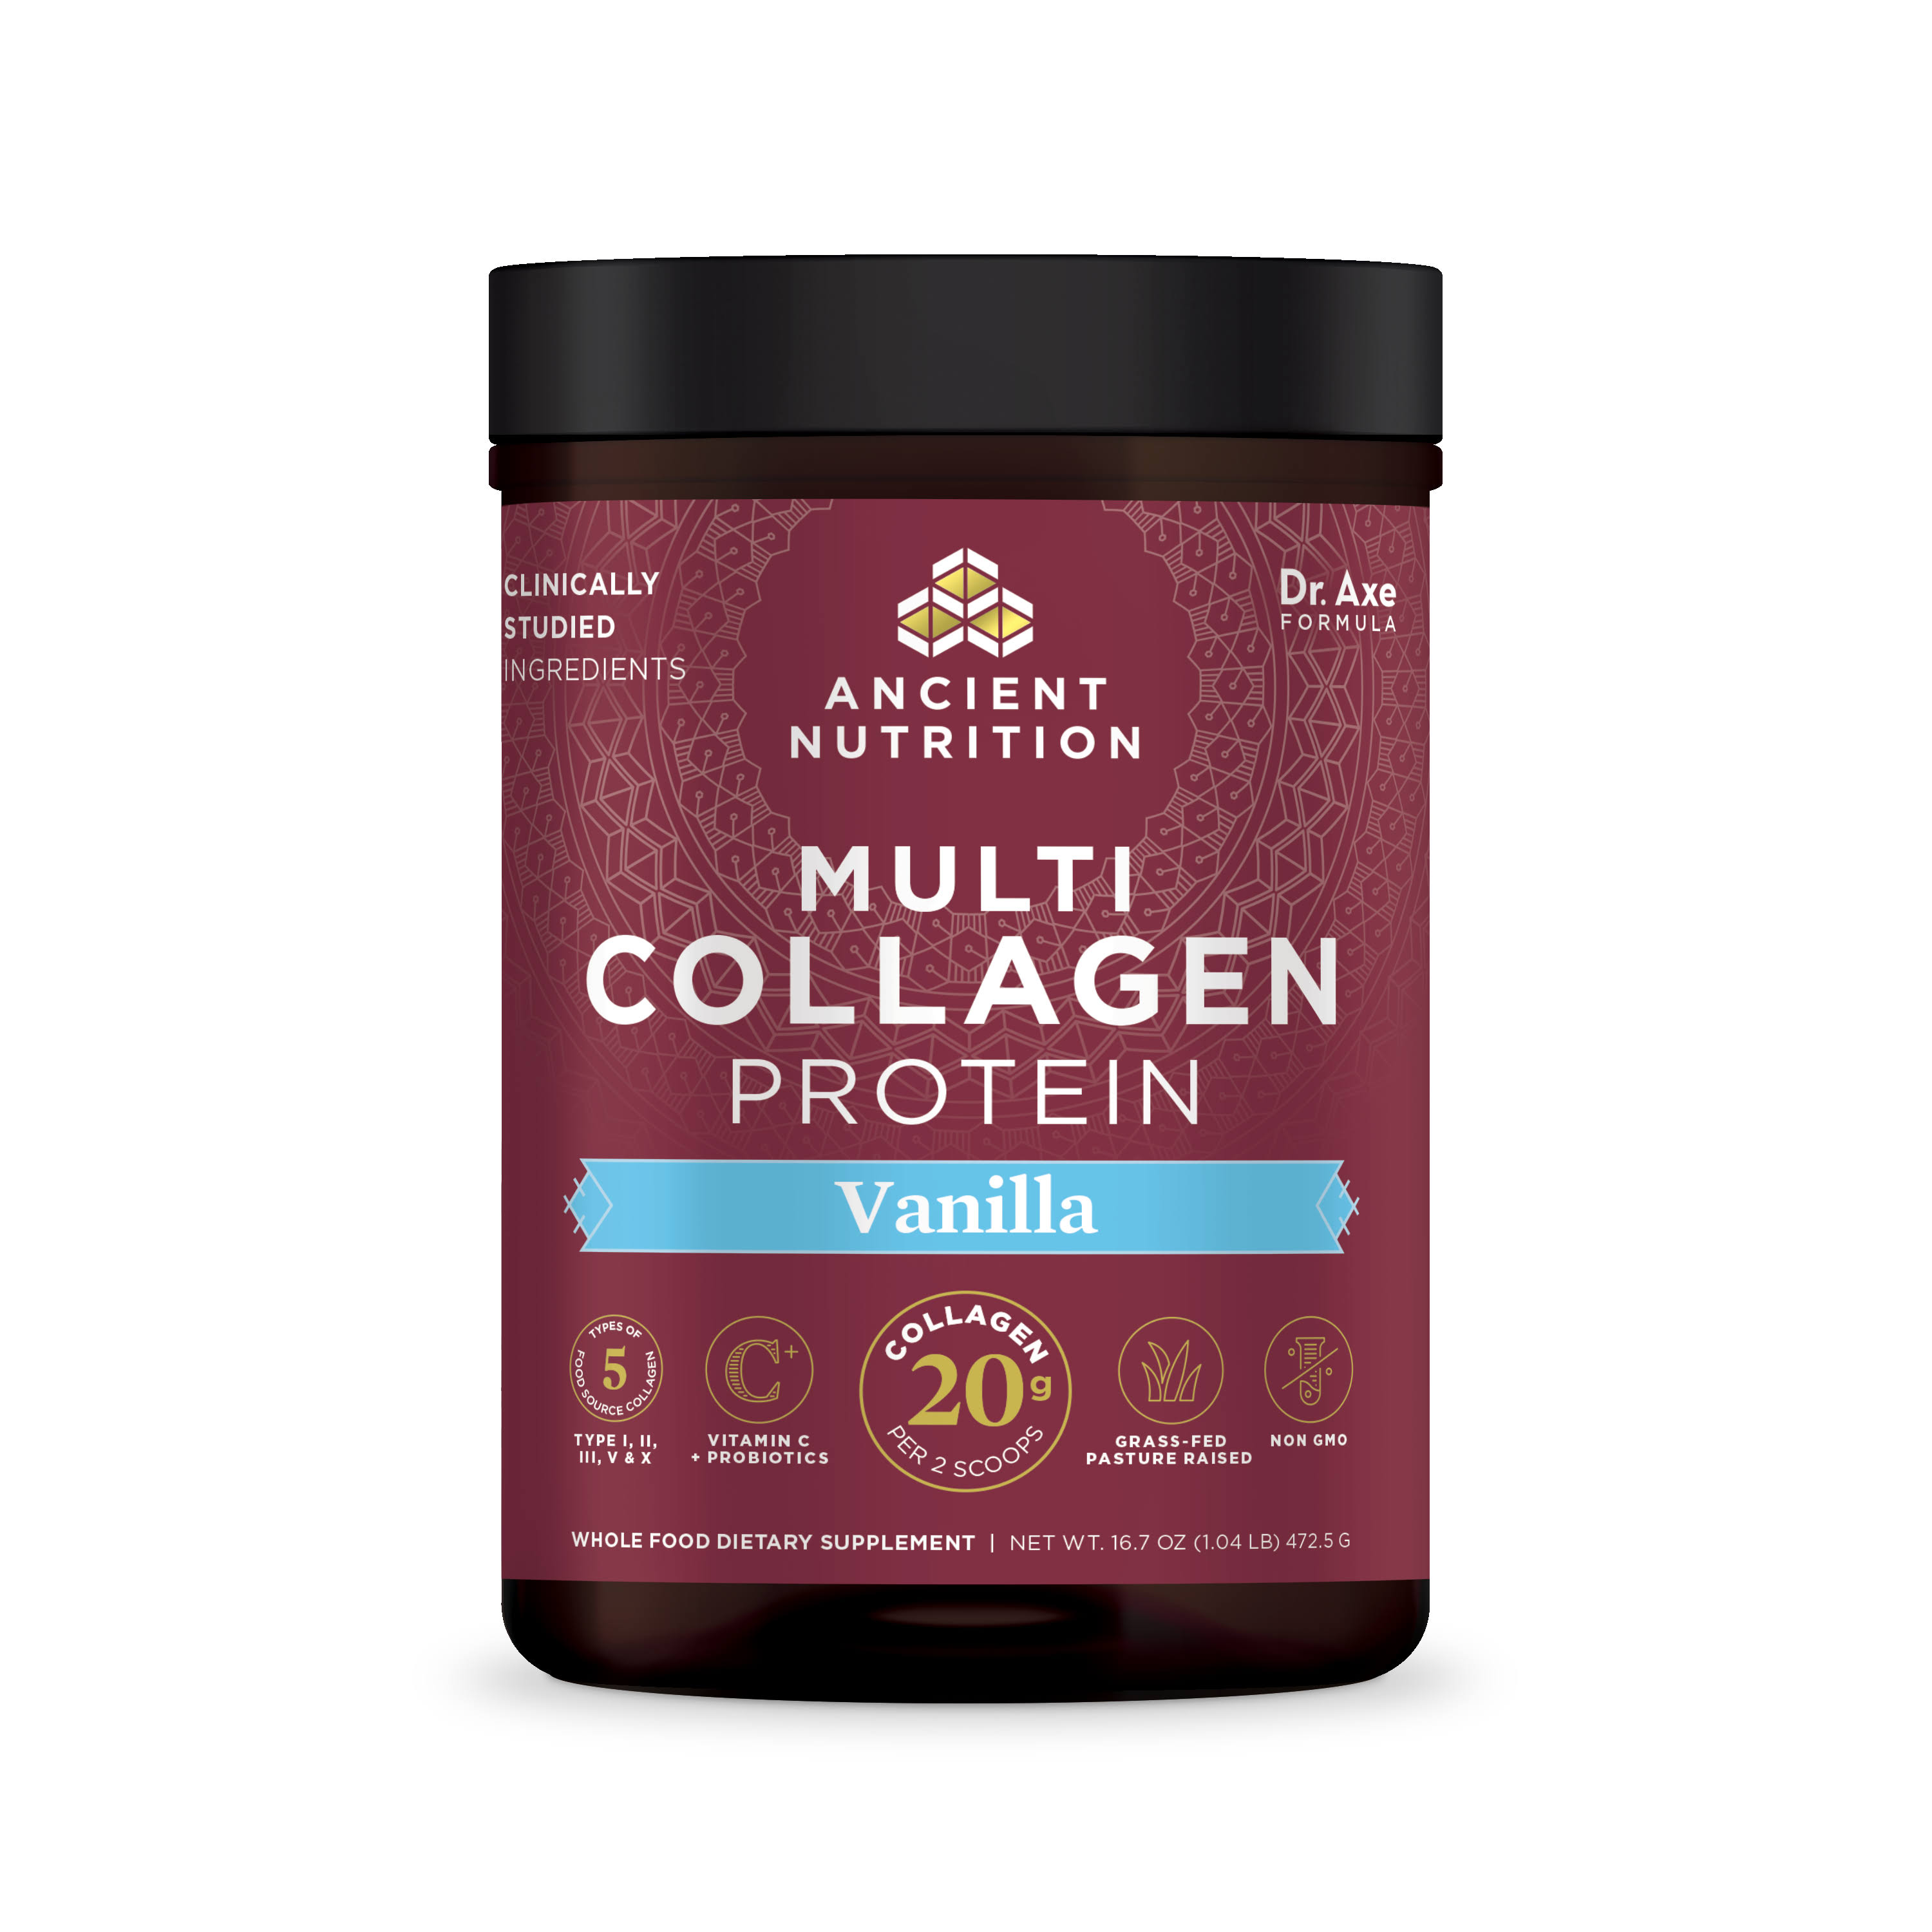 Ancient Nutrition Multi Collagen Protein, Vanilla - 16.7 oz